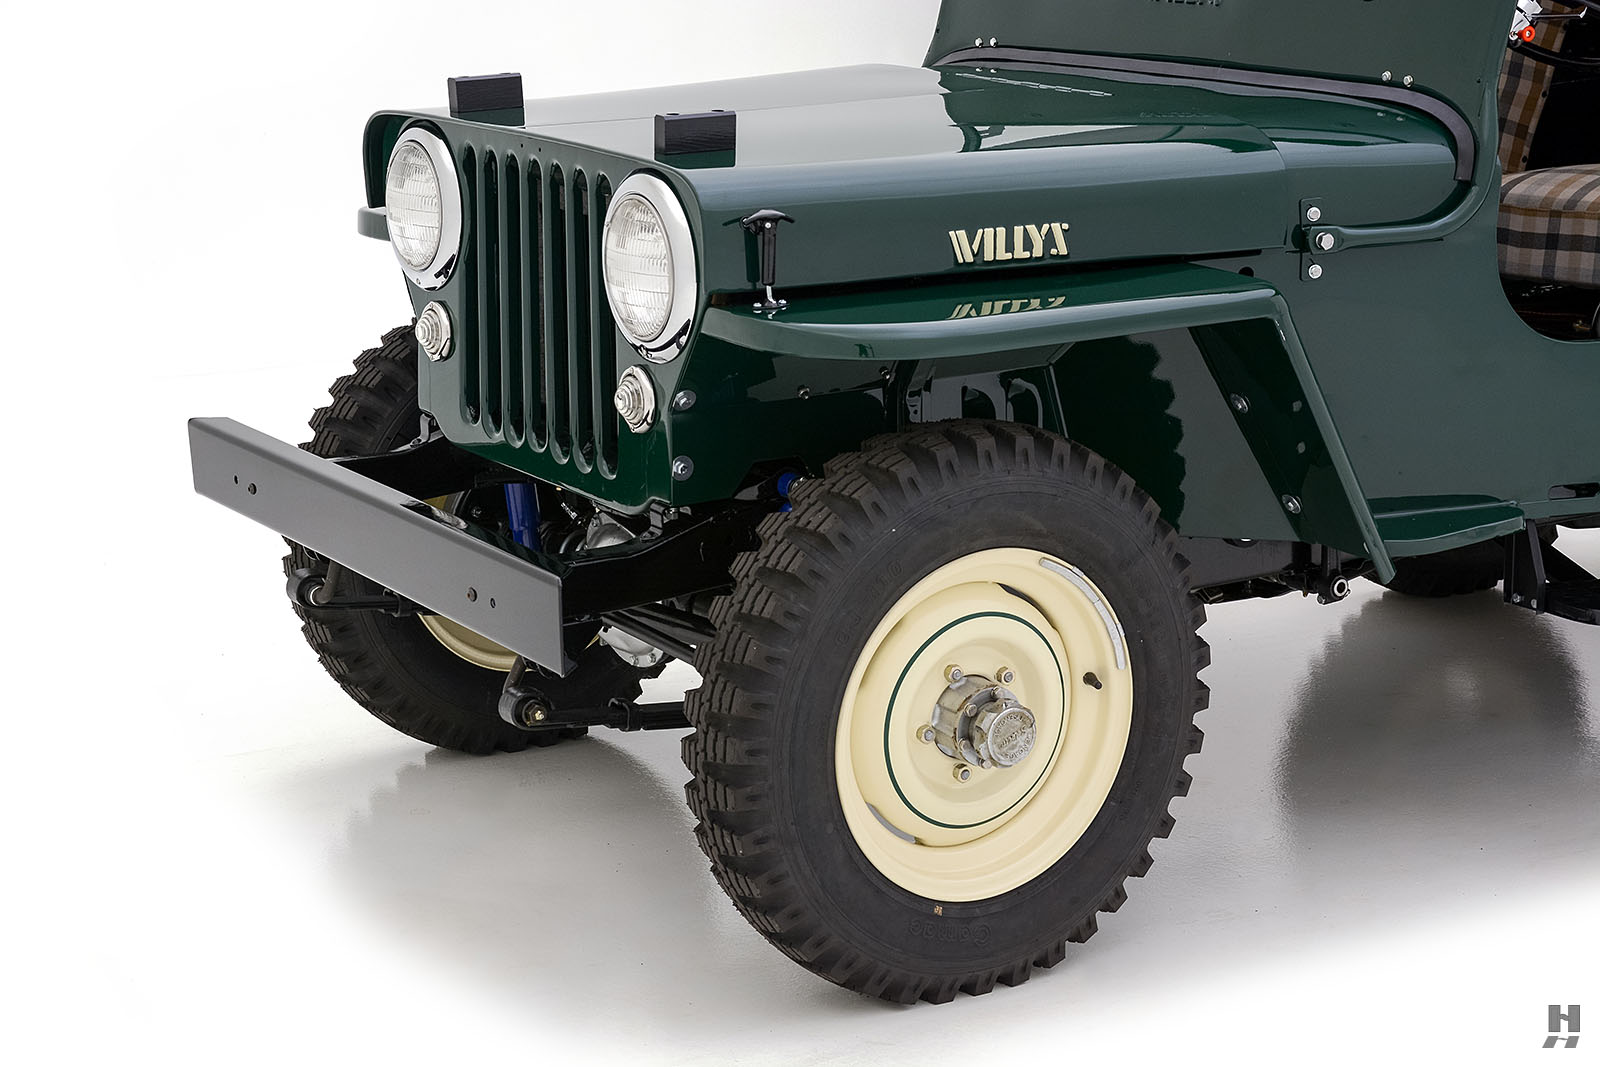 1955 willys-jeep cj-3b 1/4 ton